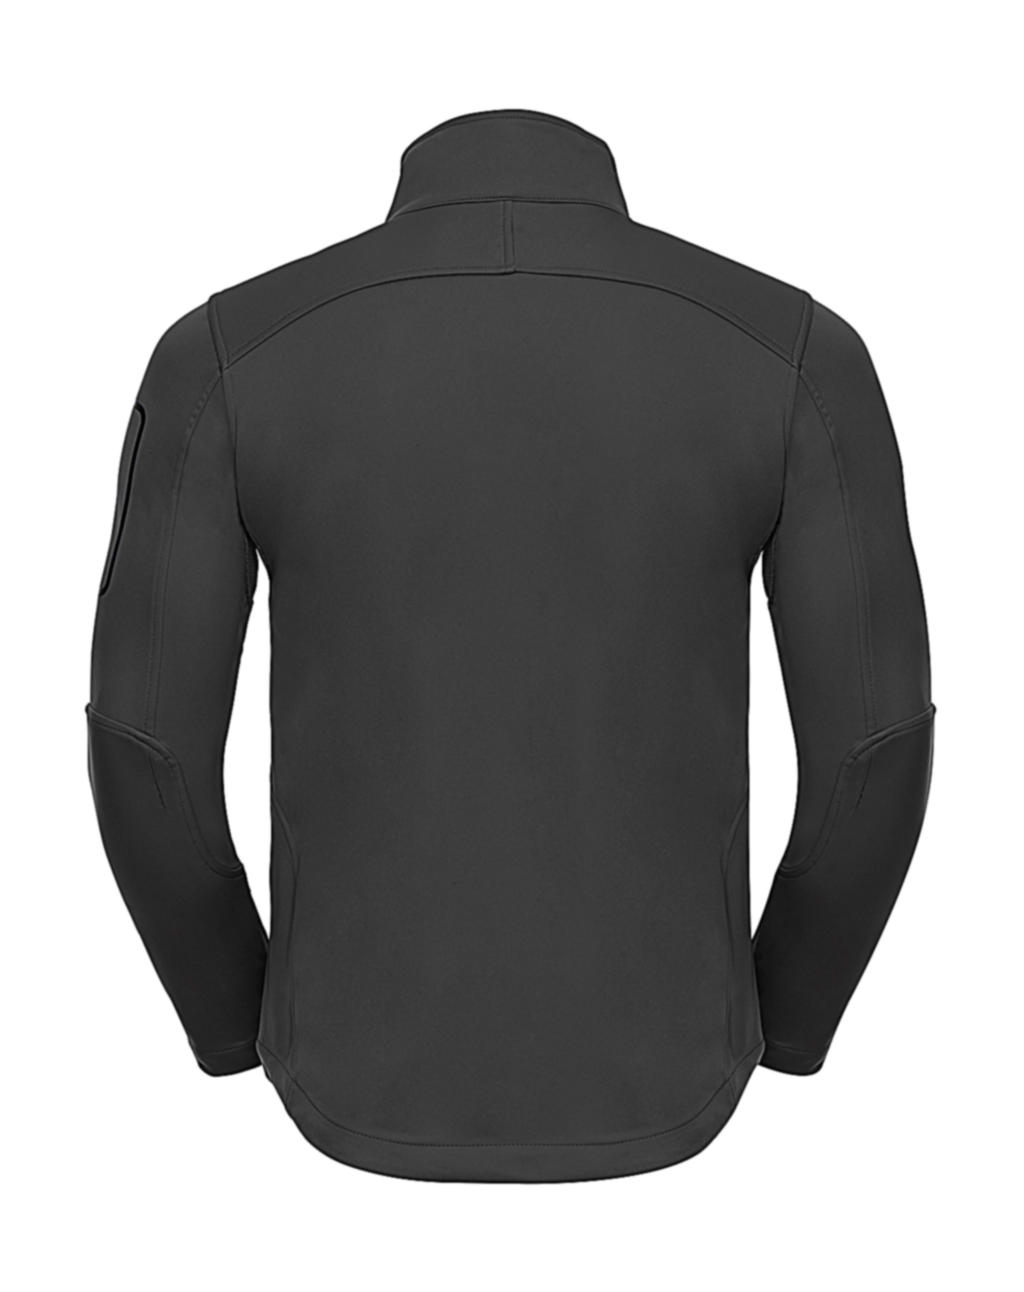  Mens Sportshell 5000 Jacket in Farbe Black